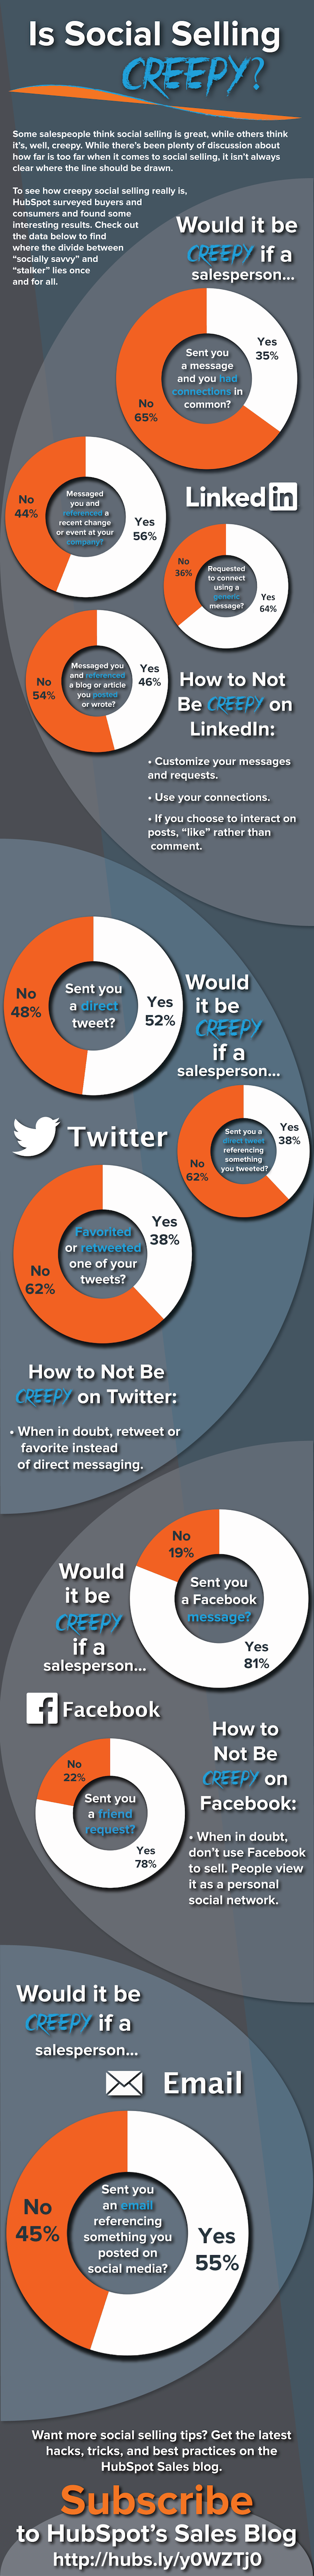 socialselling.infographic